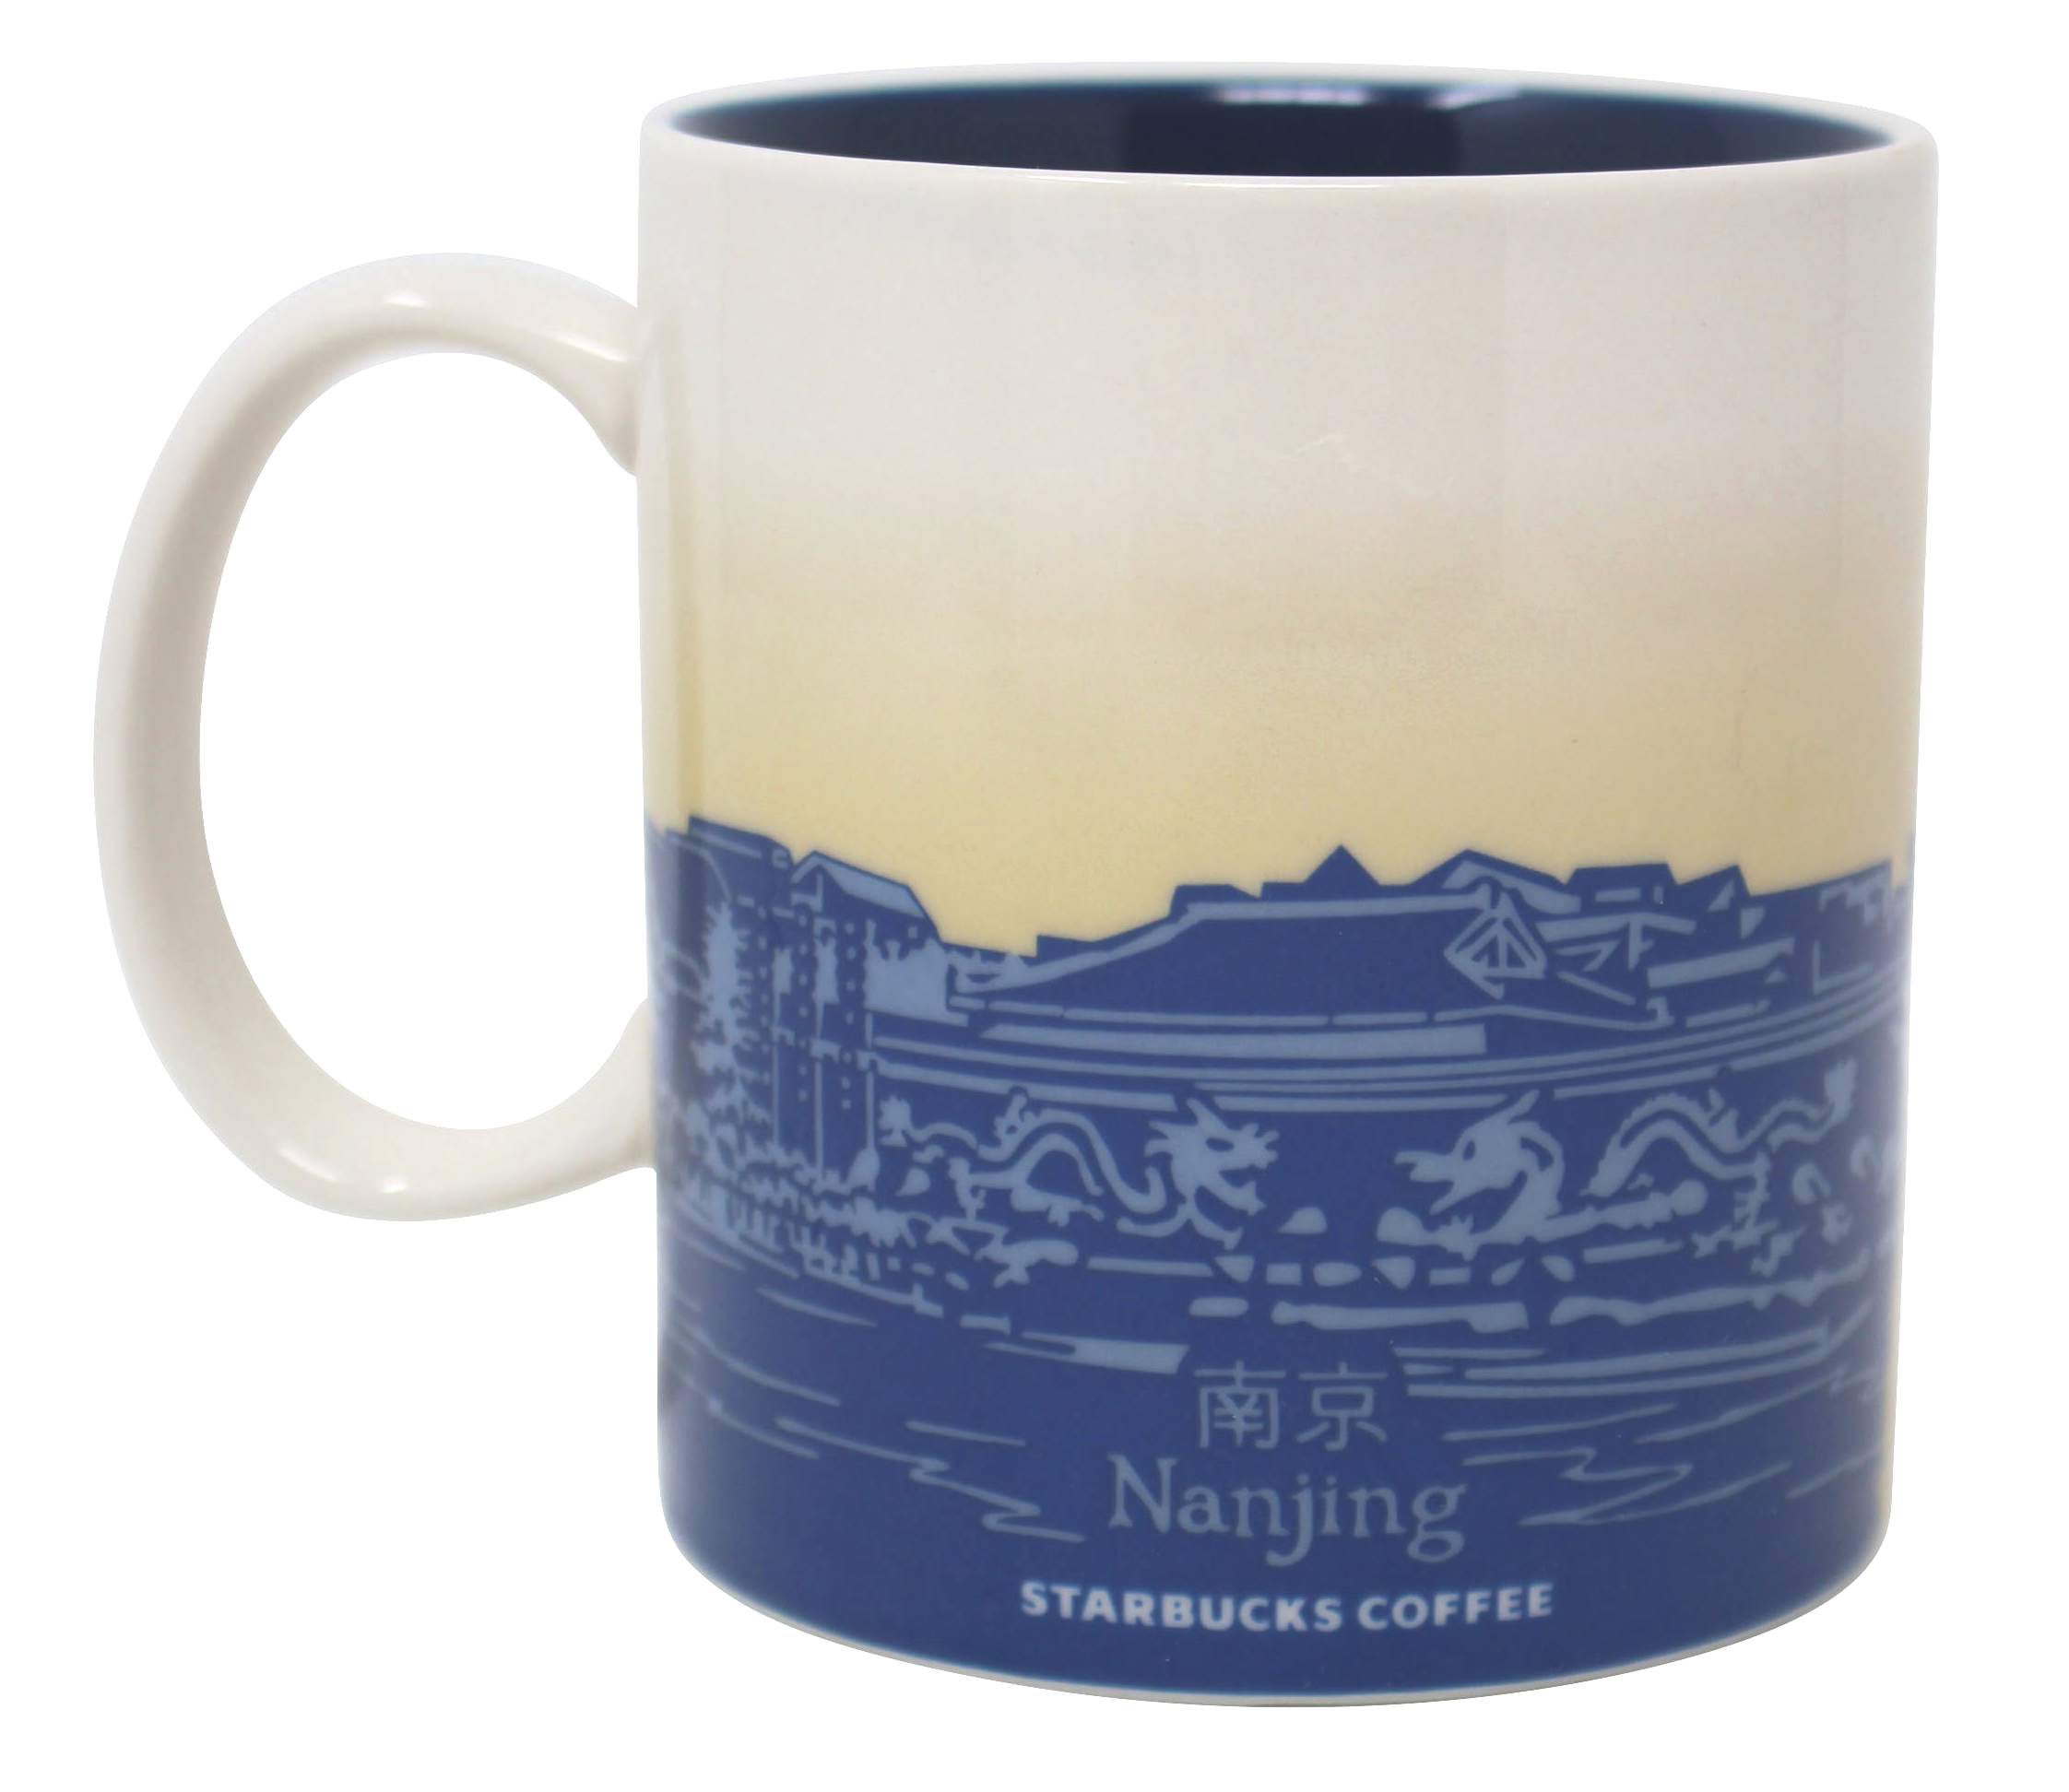 Starbucks Global Icon Series Nanjing Ceramic Mug, 16 Oz